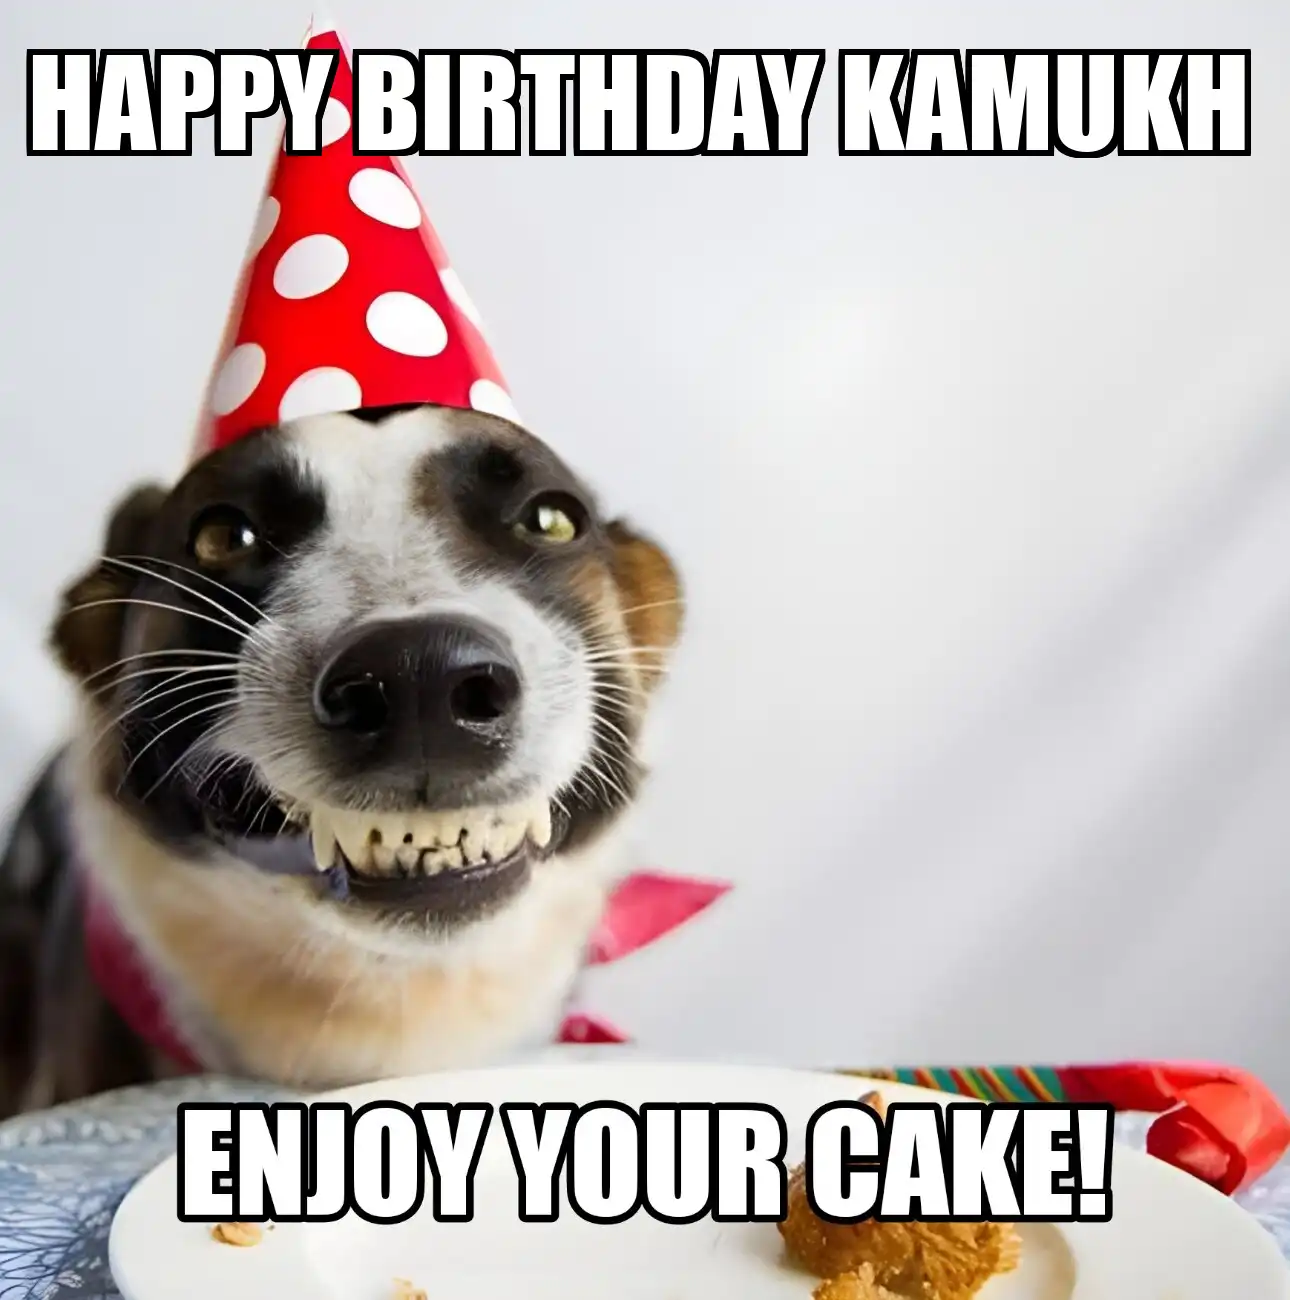 Happy Birthday Kamukh Enjoy Your Cake Dog Meme